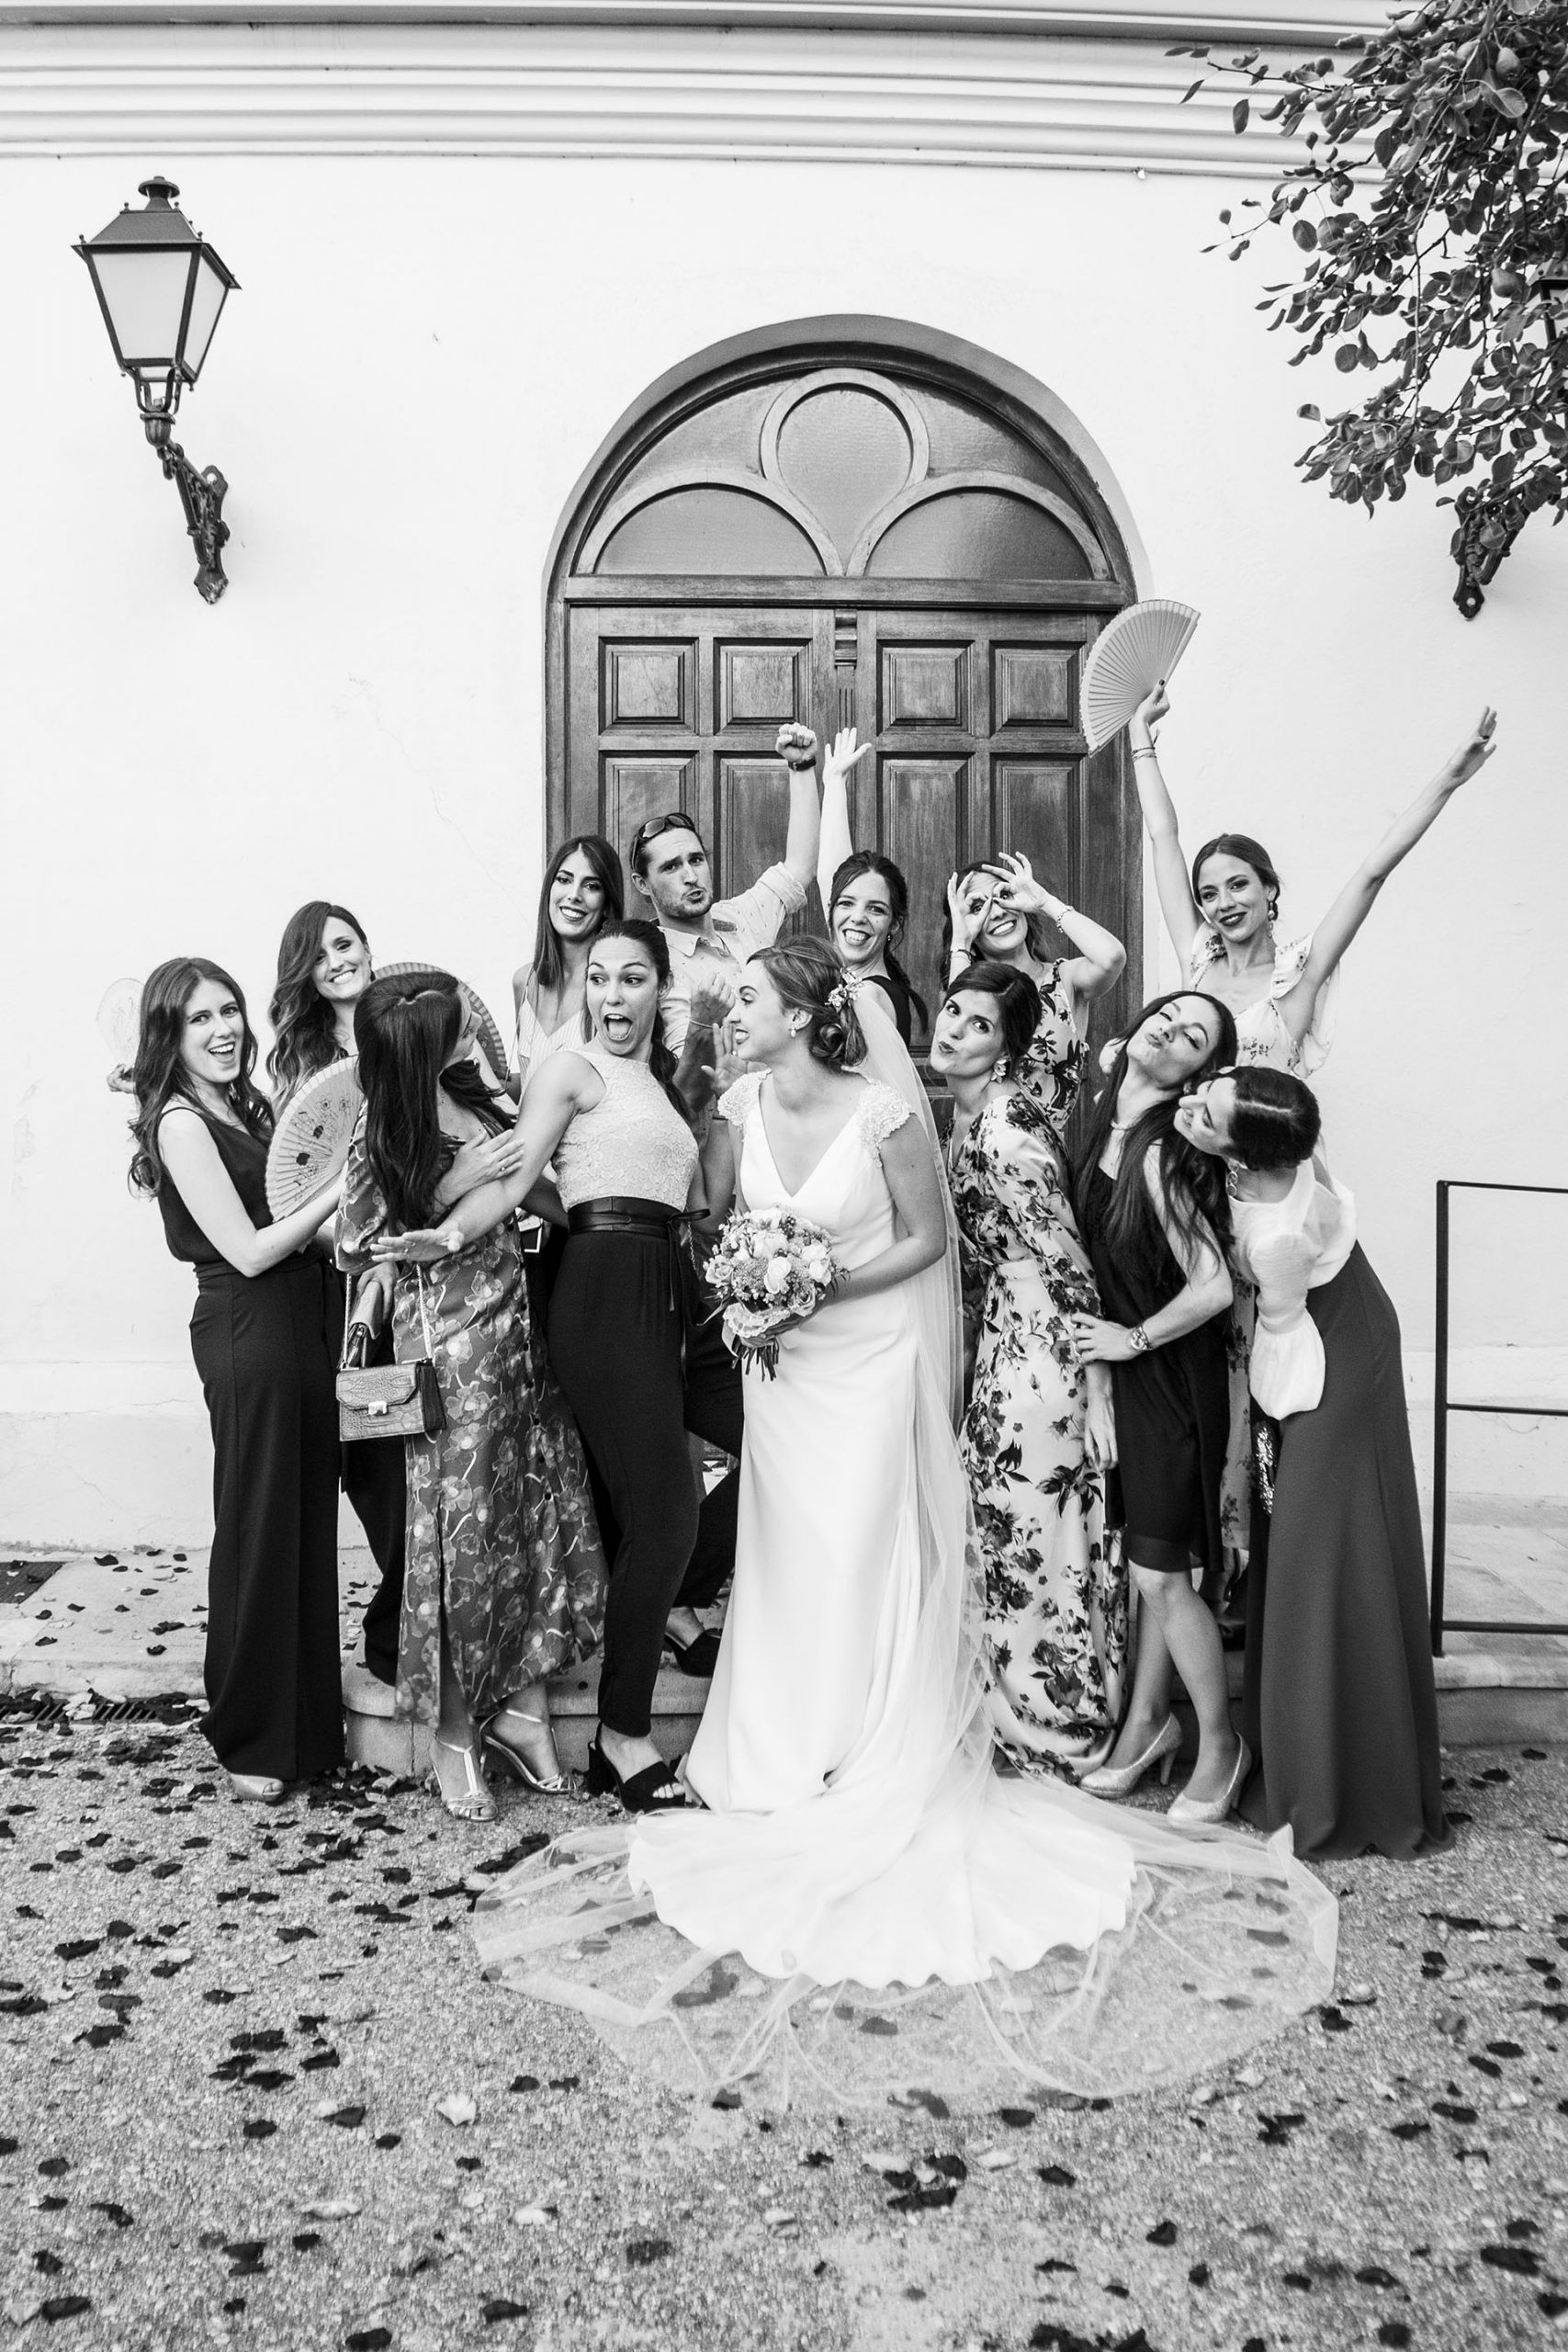 Fotografias de bodas españolas-angela coronel-guadalajara